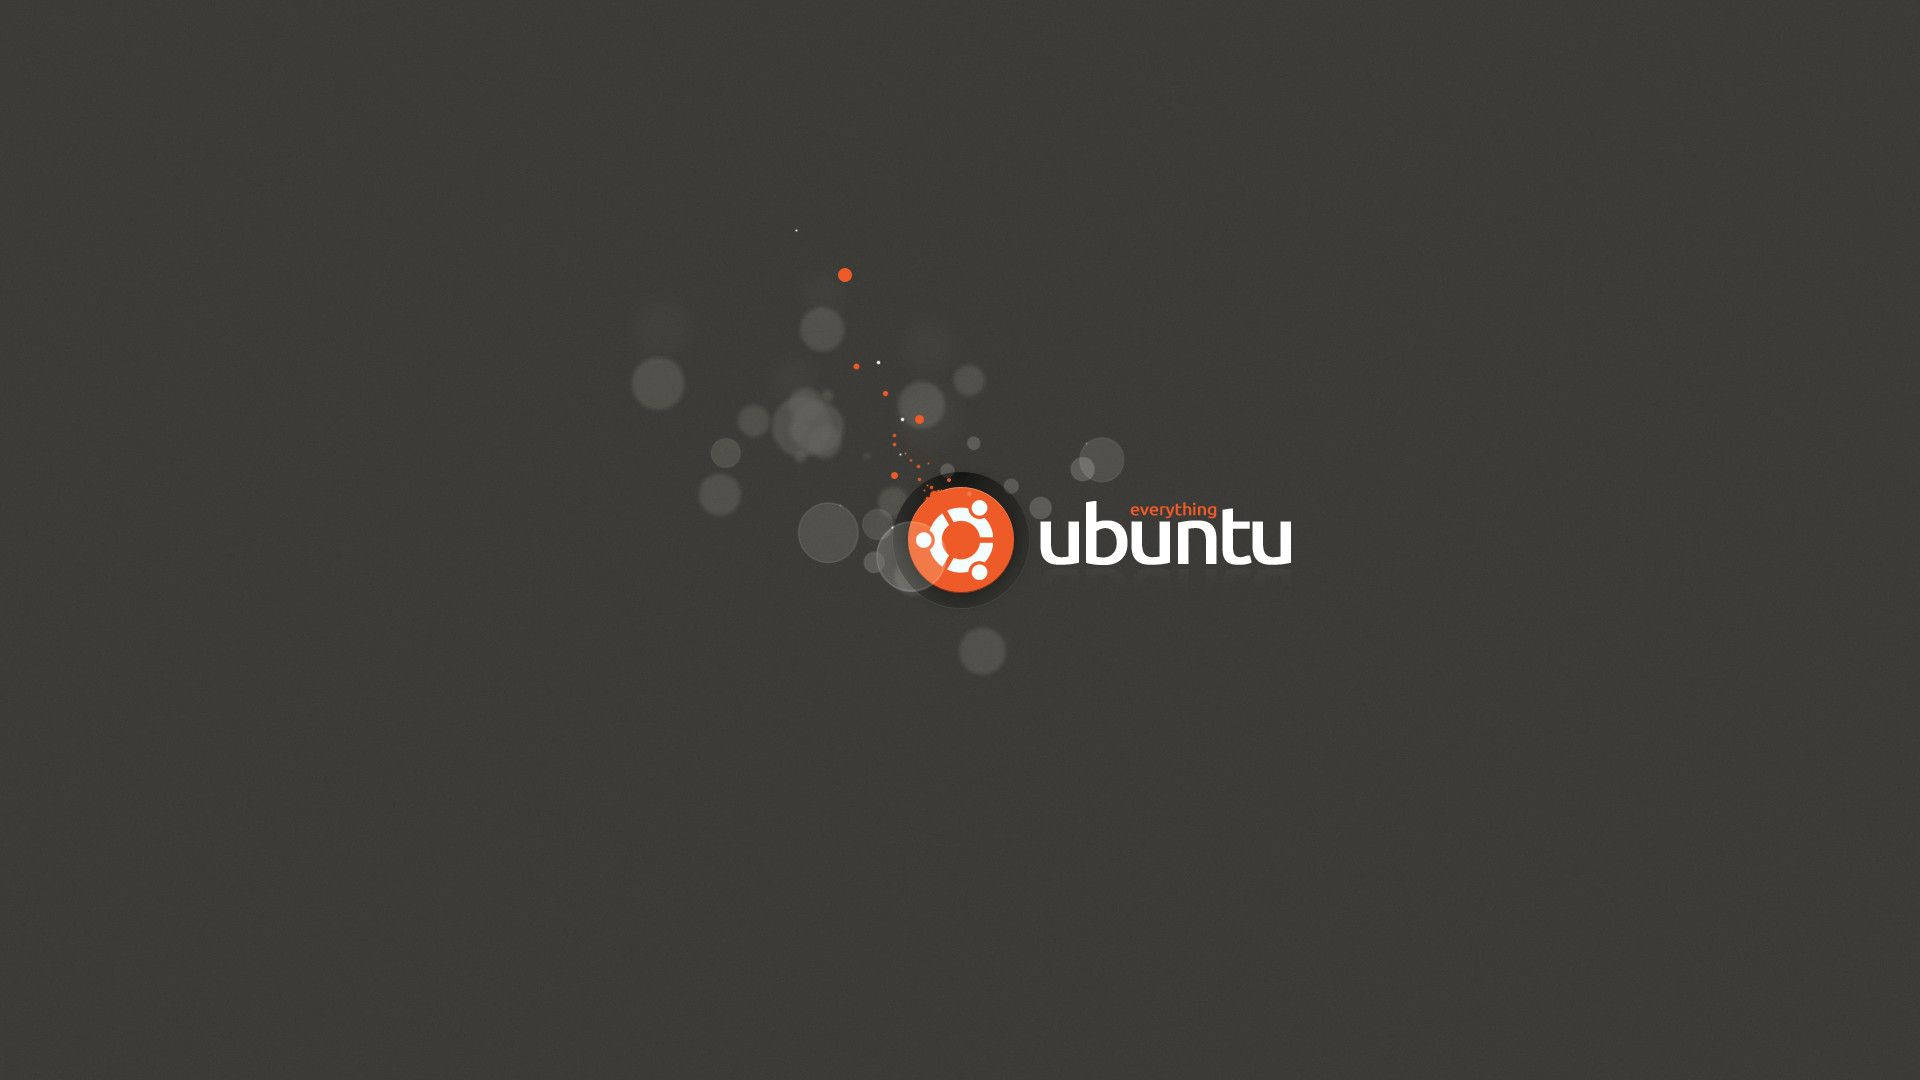 Ubuntu 1920X1080 Wallpaper and Background Image